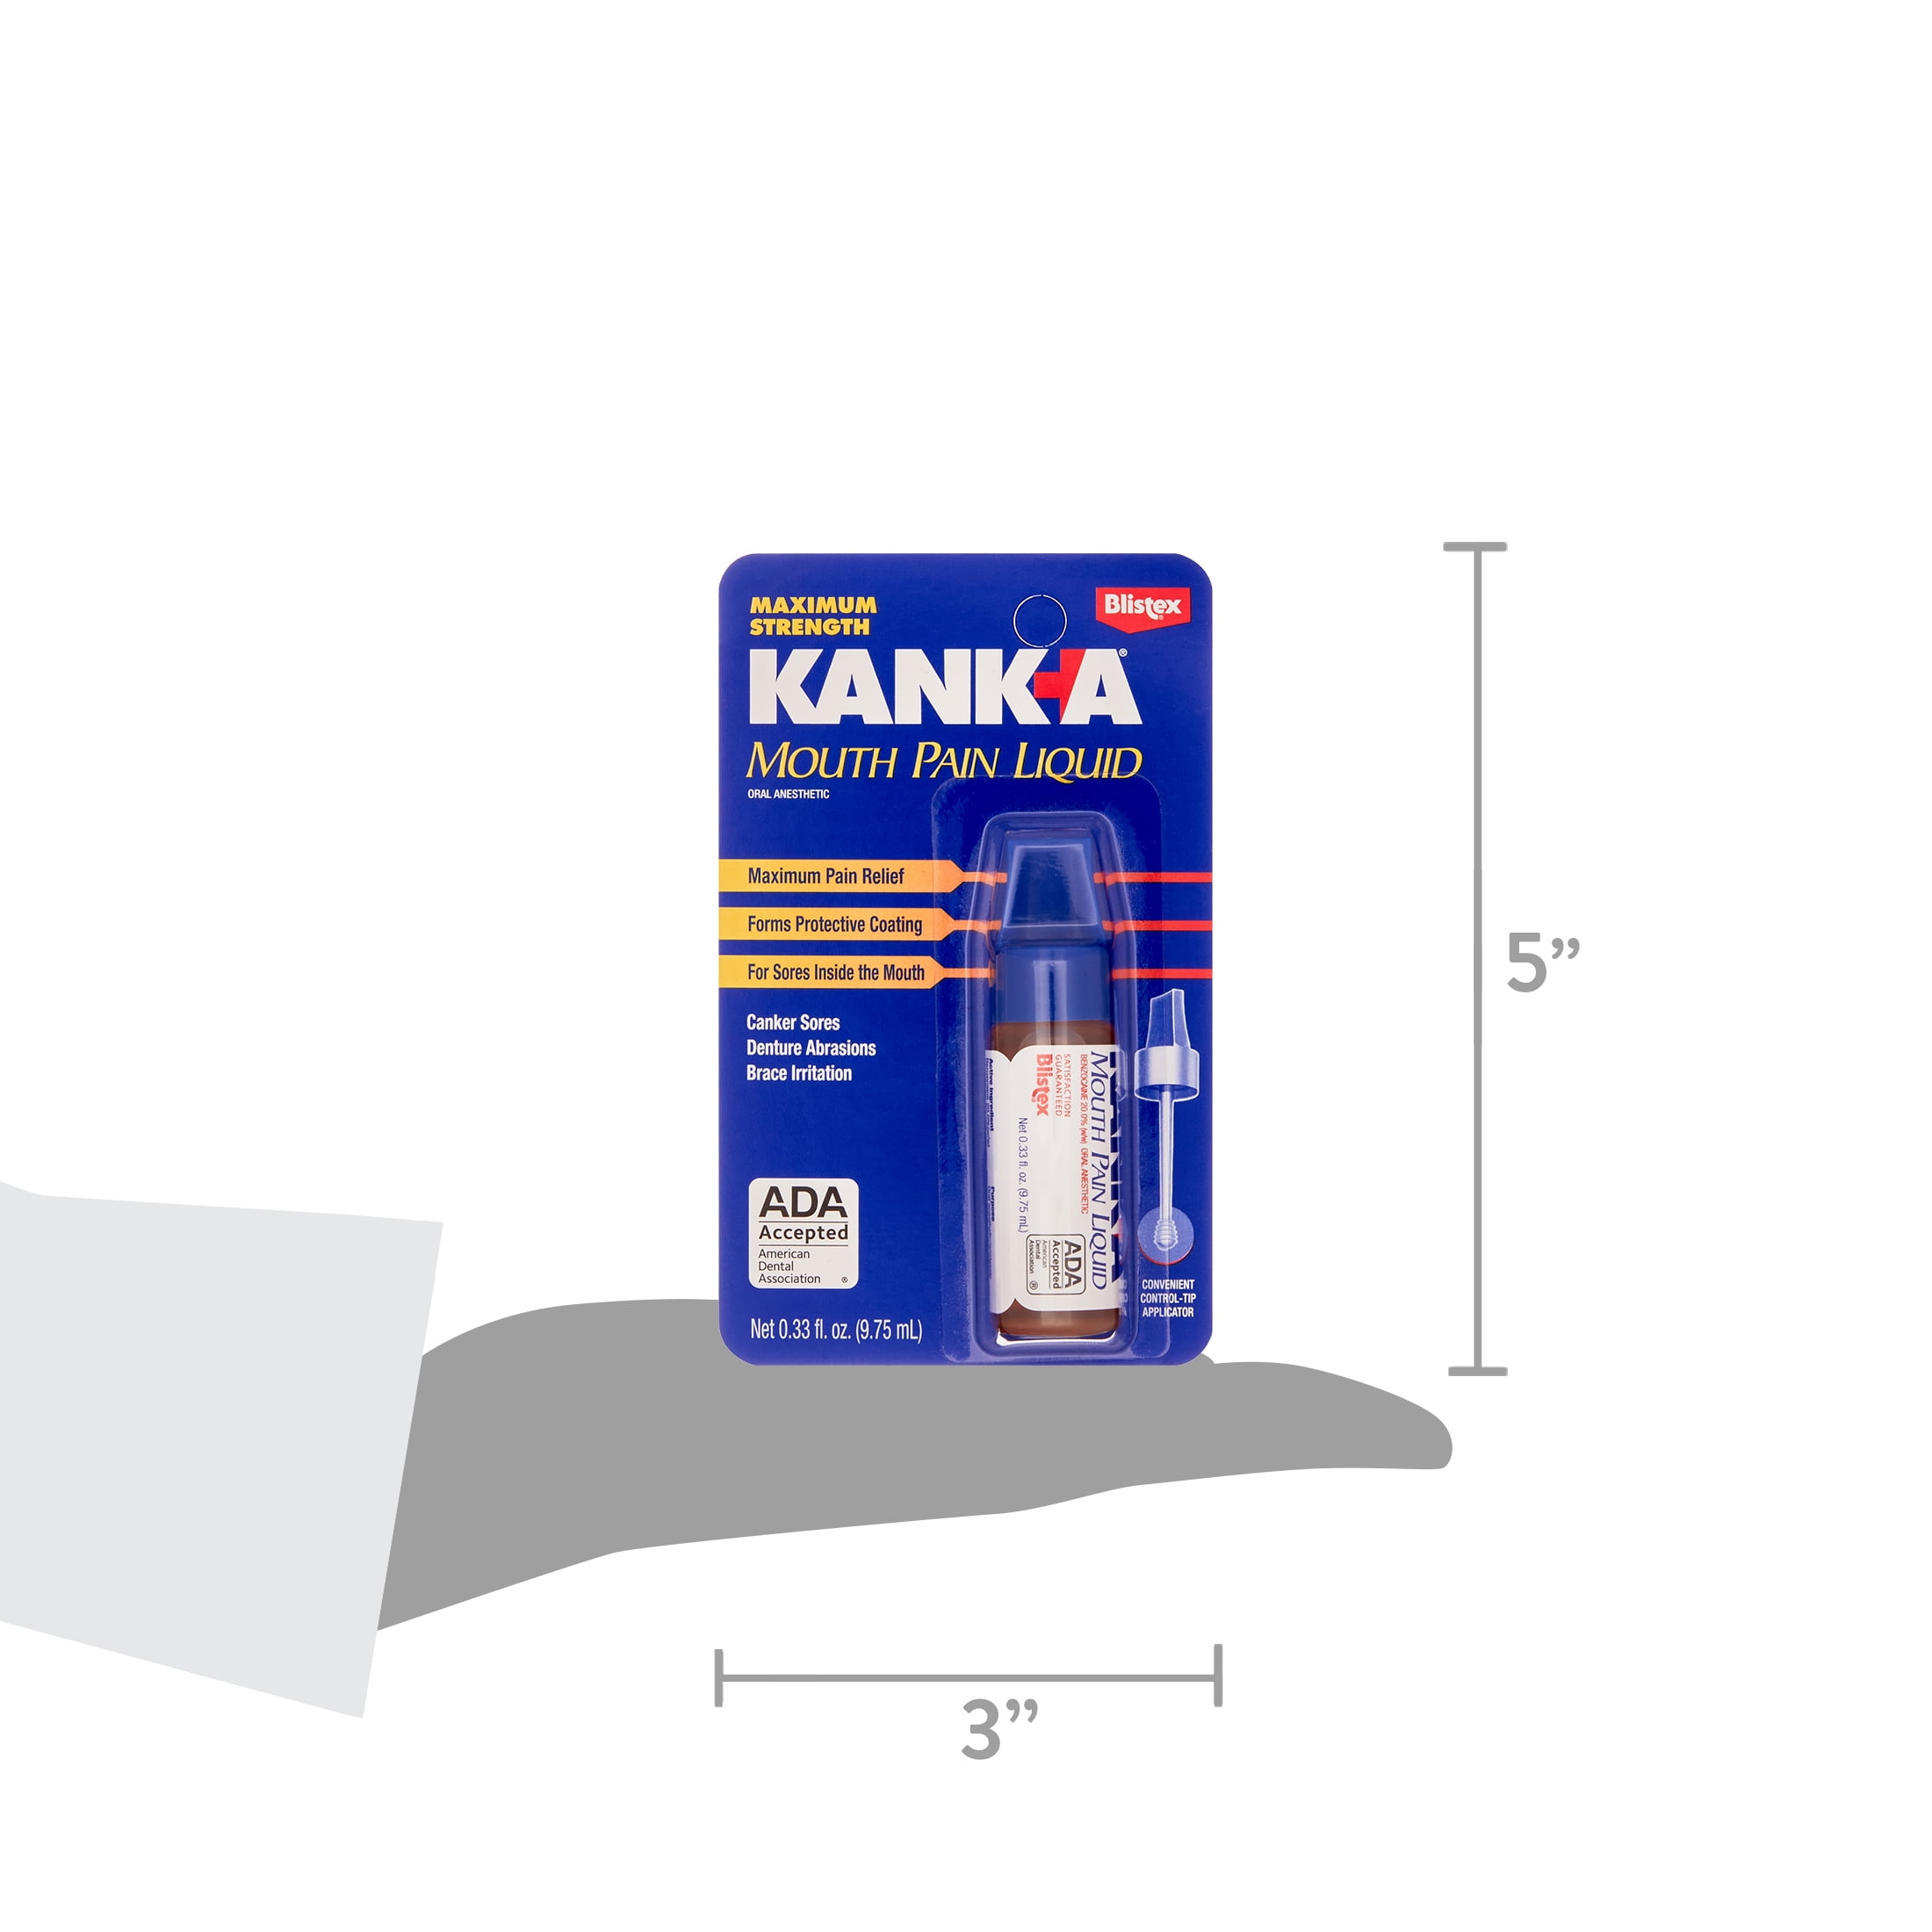 Kanka Mouth Pain Liquid, Maximum Strength - 0.33 fl oz